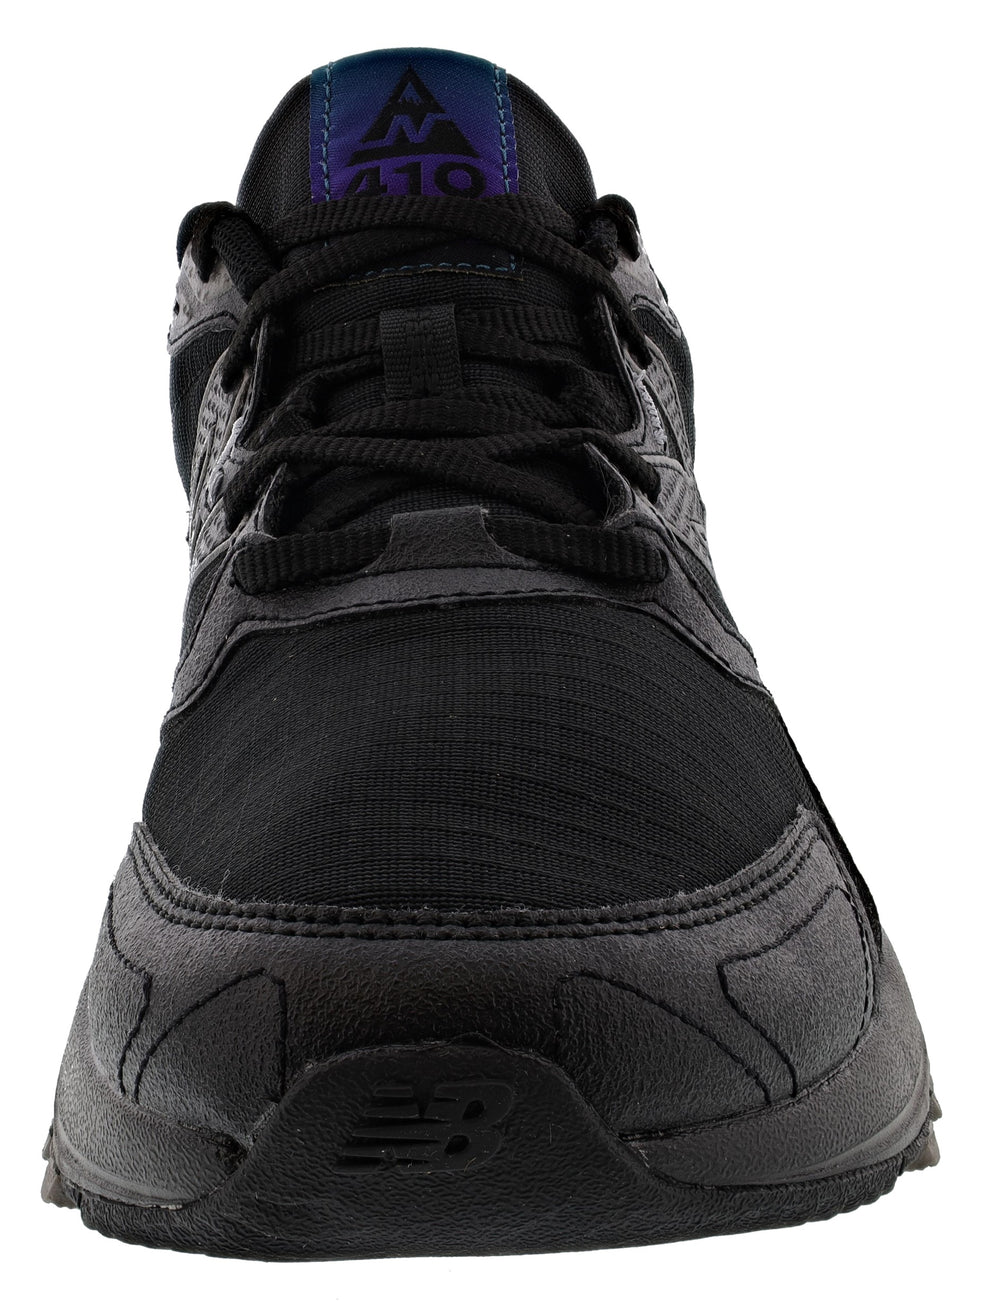 New Balance 410 V7 Trail Running Shoes-Men